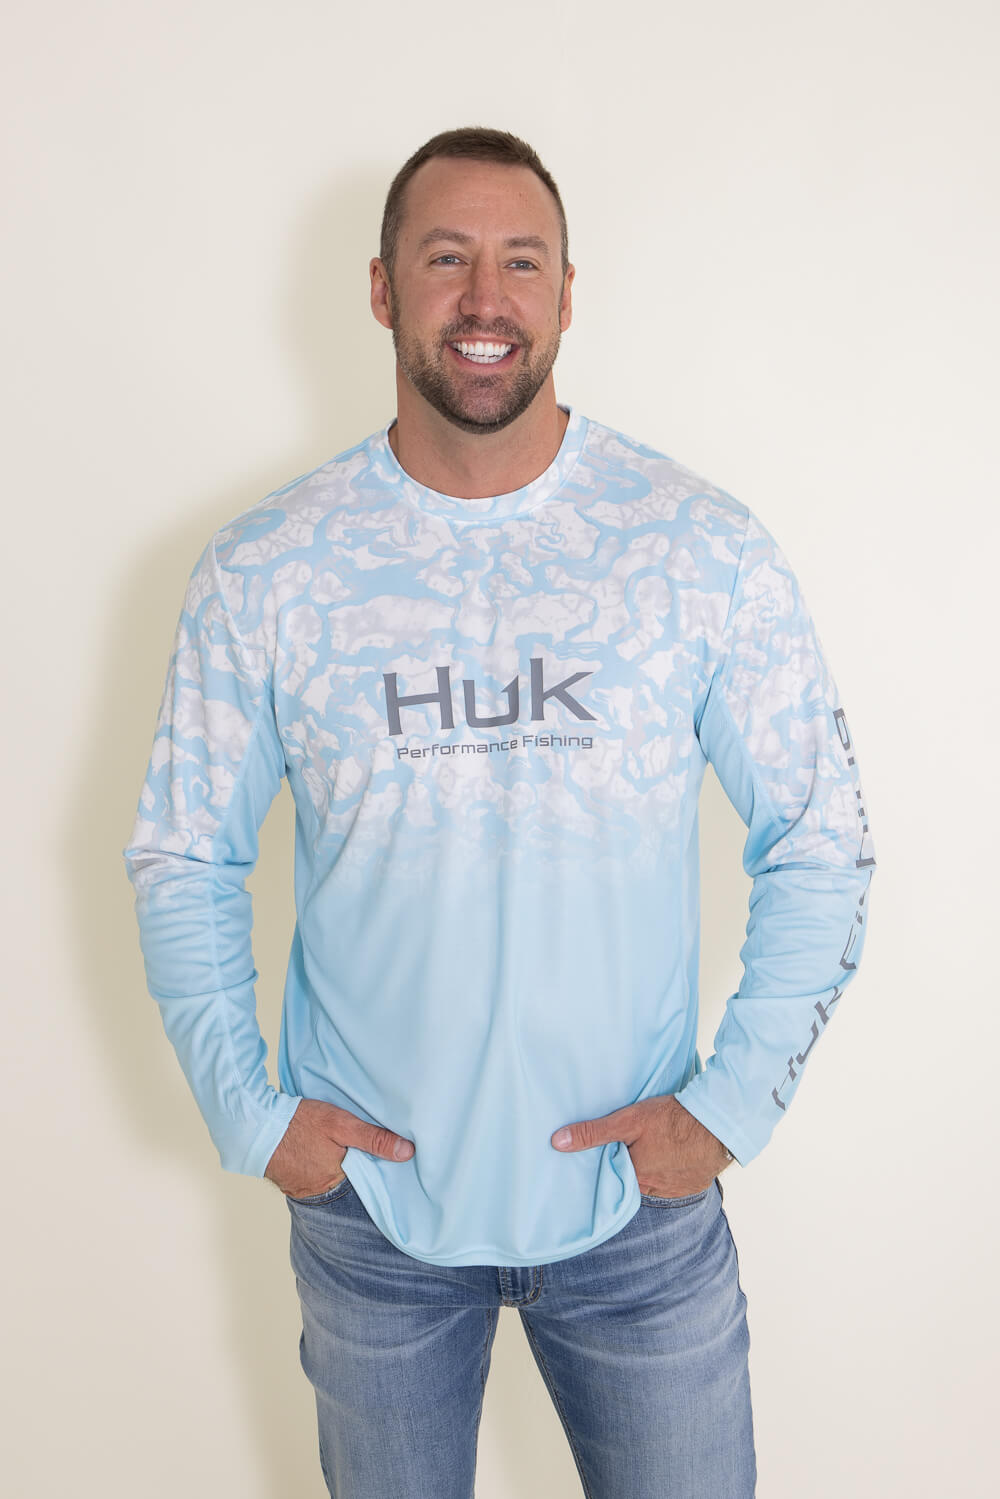 HUK Fishing T-shirt hooded Fishing Shirt Men Long Sleeve Uv